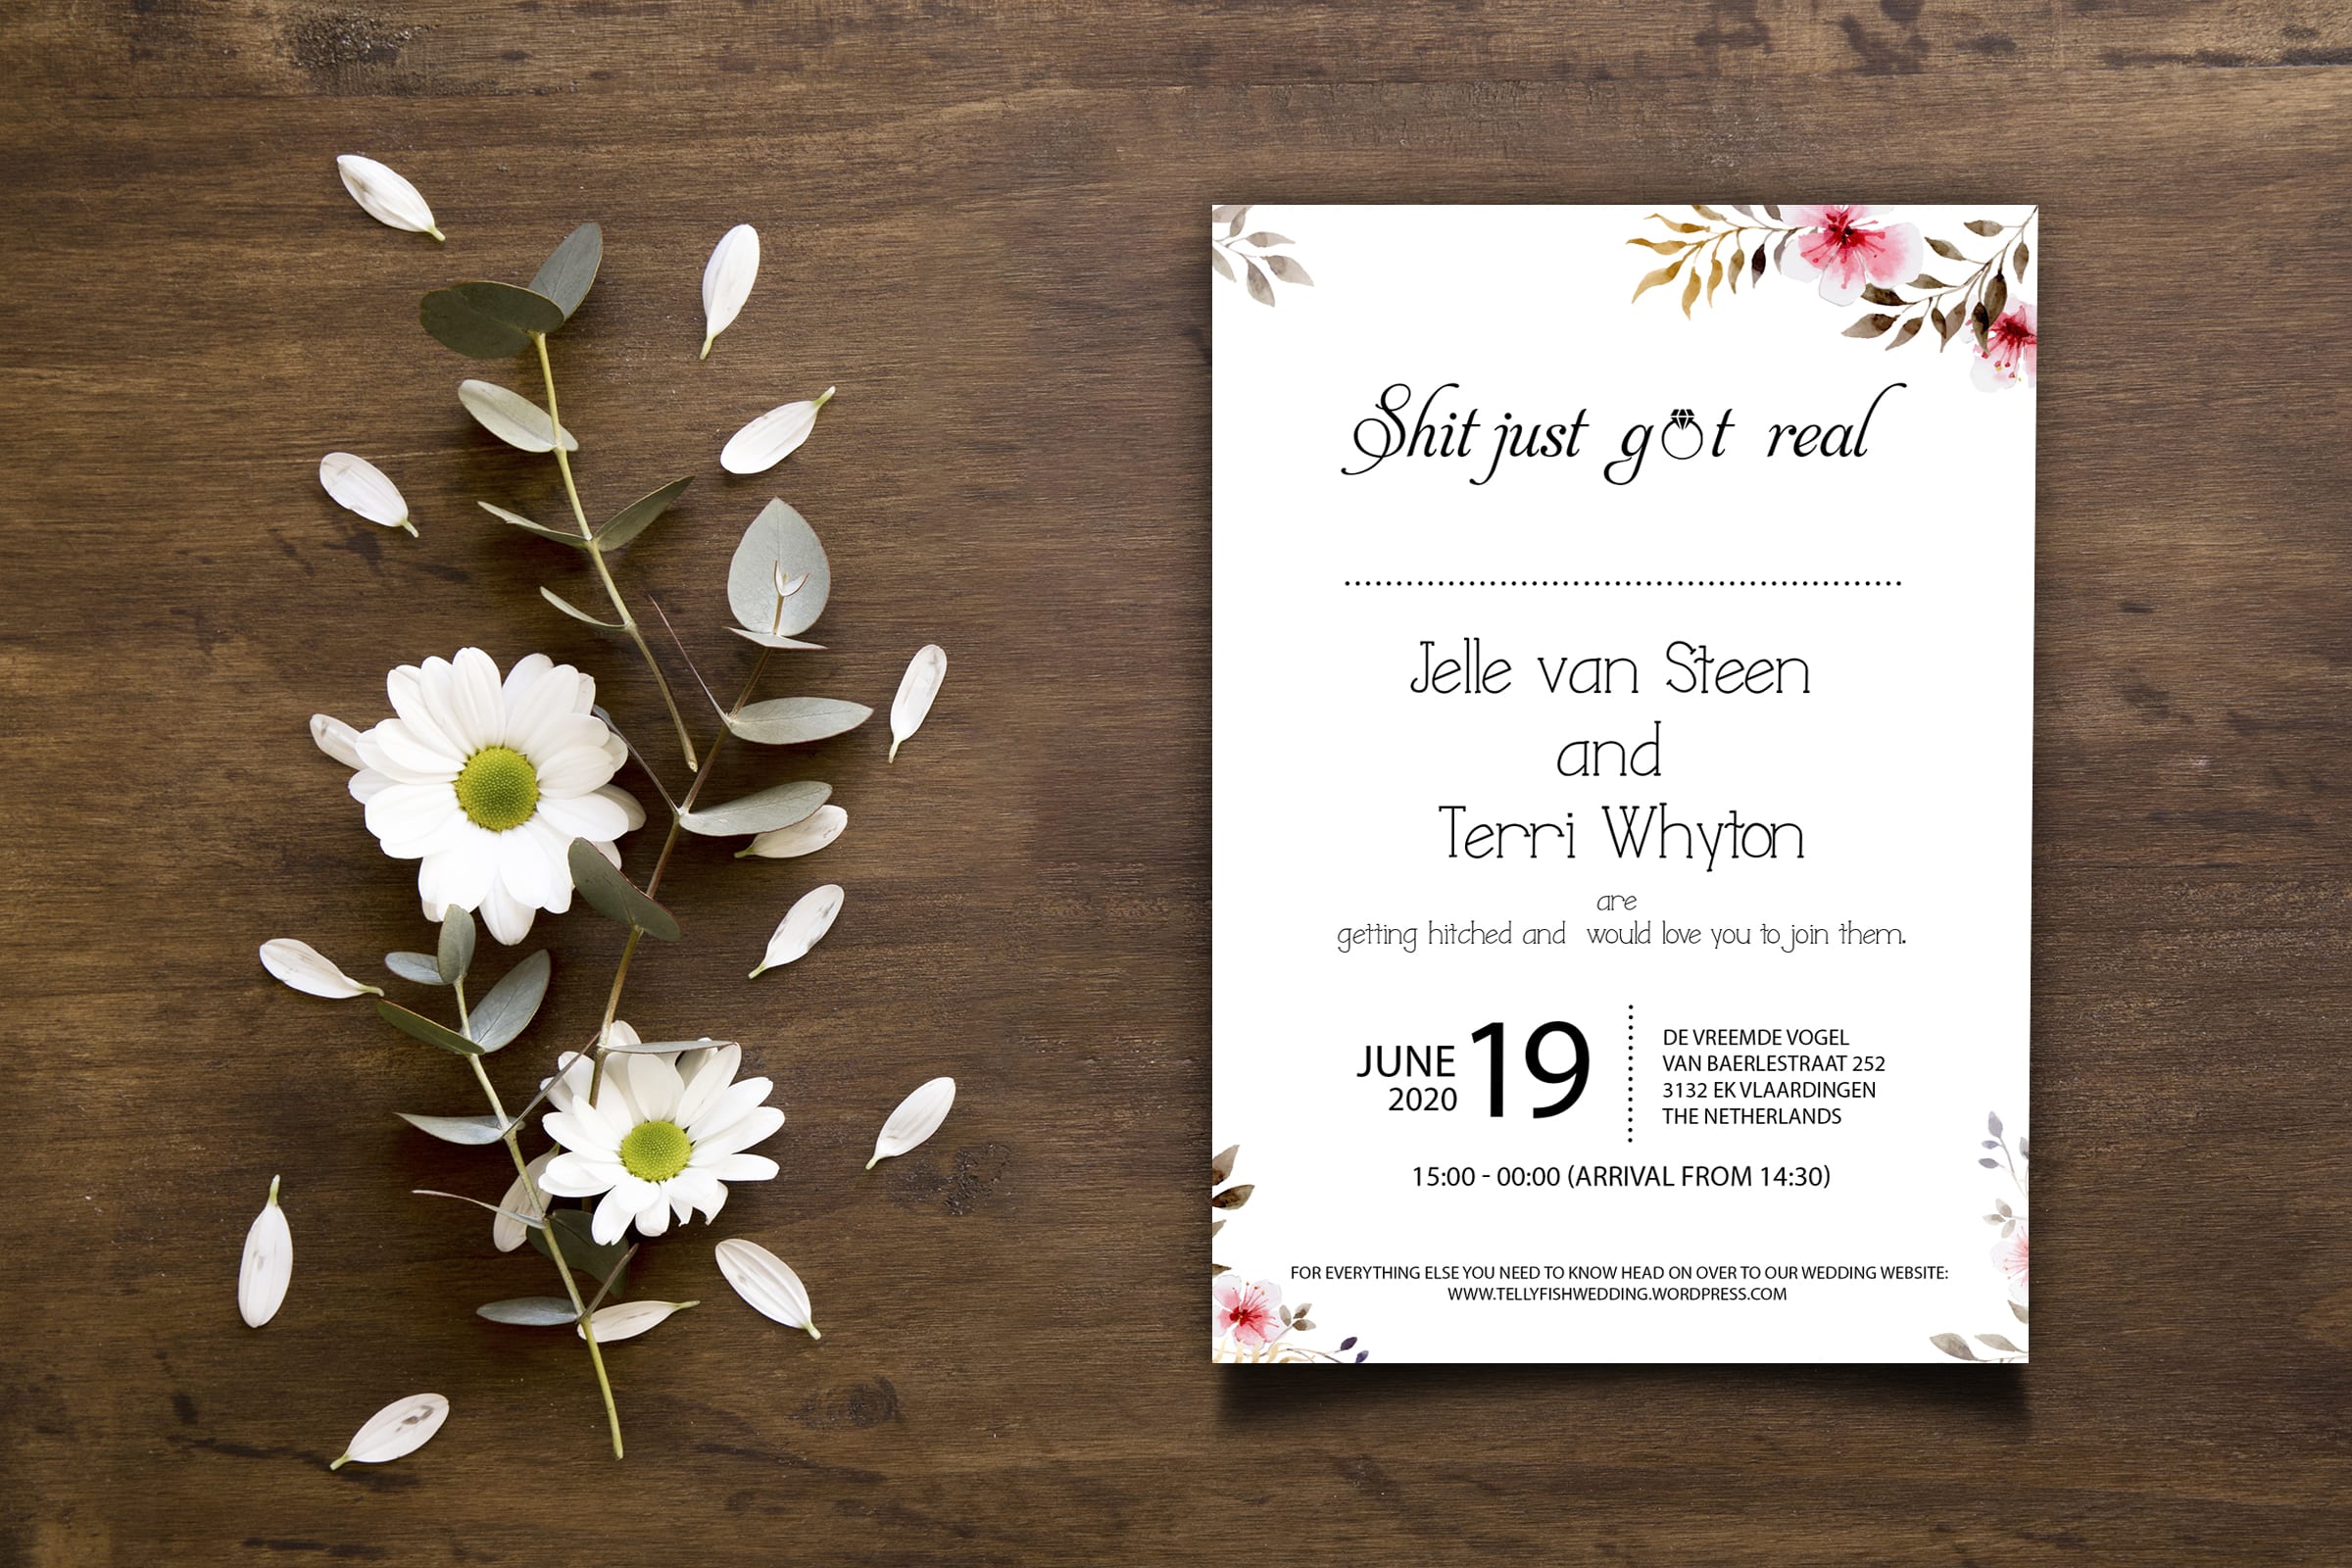 Design wedding, birthday, party, event invitation card by Intended For Event Invitation Card Template